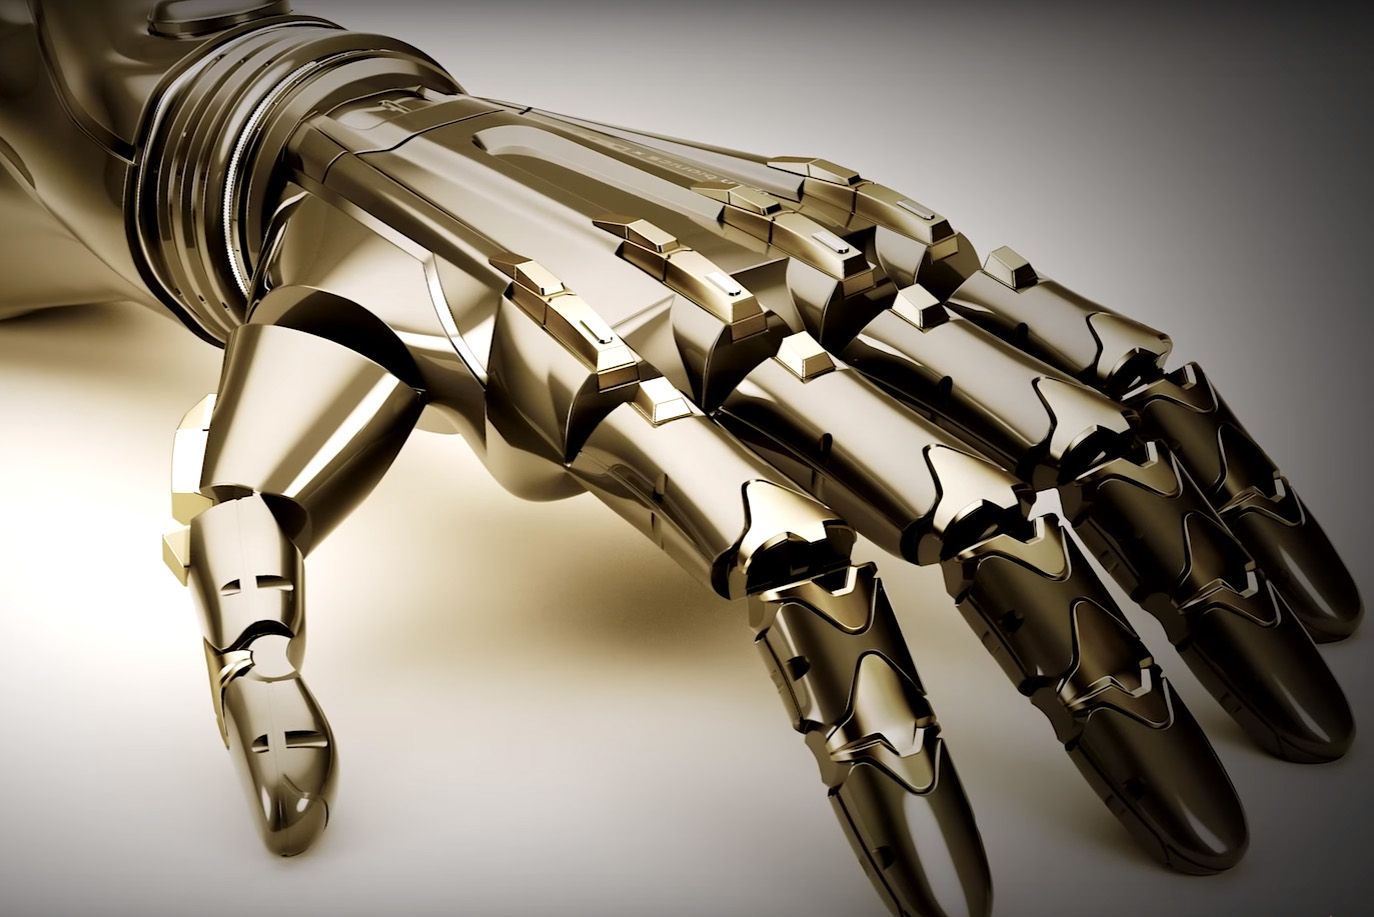 konami isn t only games company making bionics behold the deus ex cybernetic arm image 1